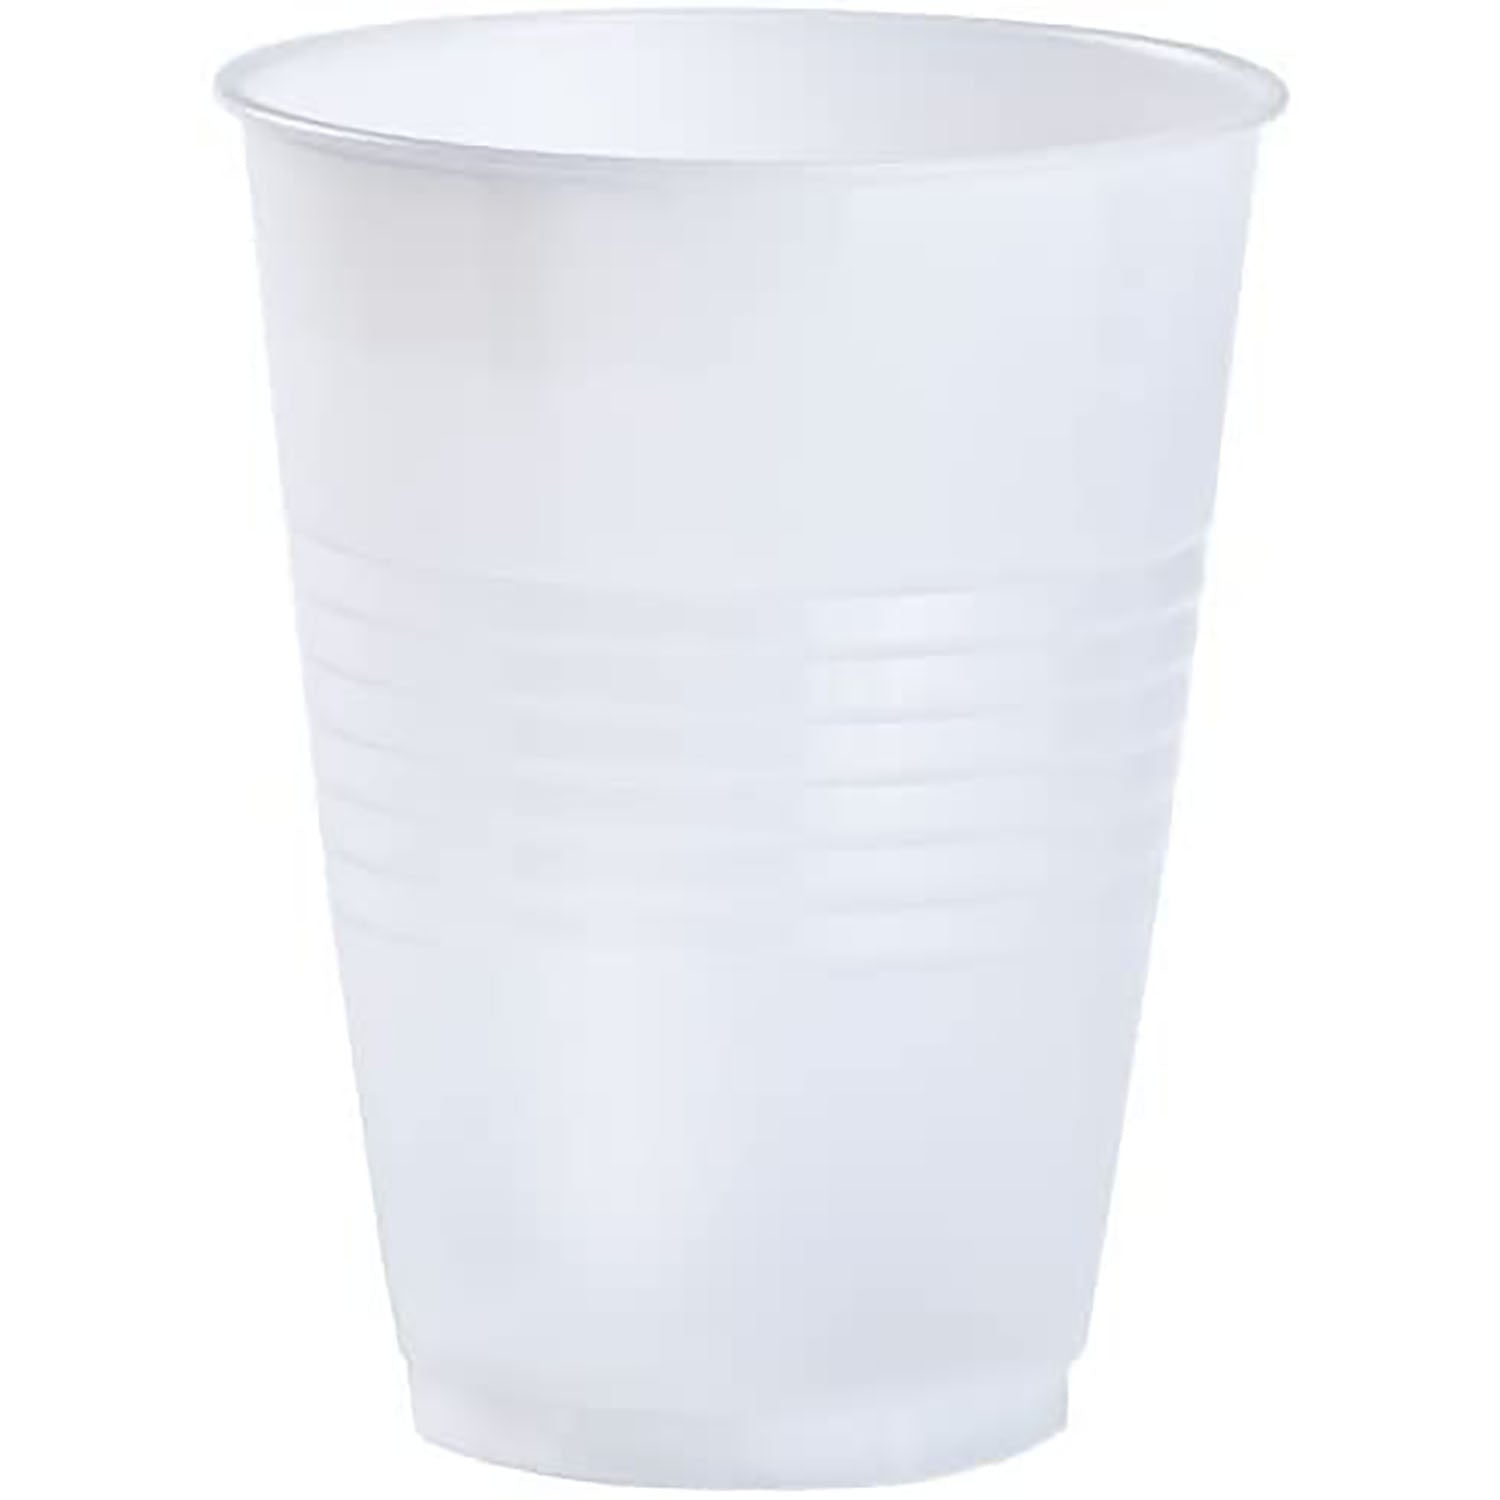 Party Dimensions Translucent Plastic Cups, 18 oz - 50 count